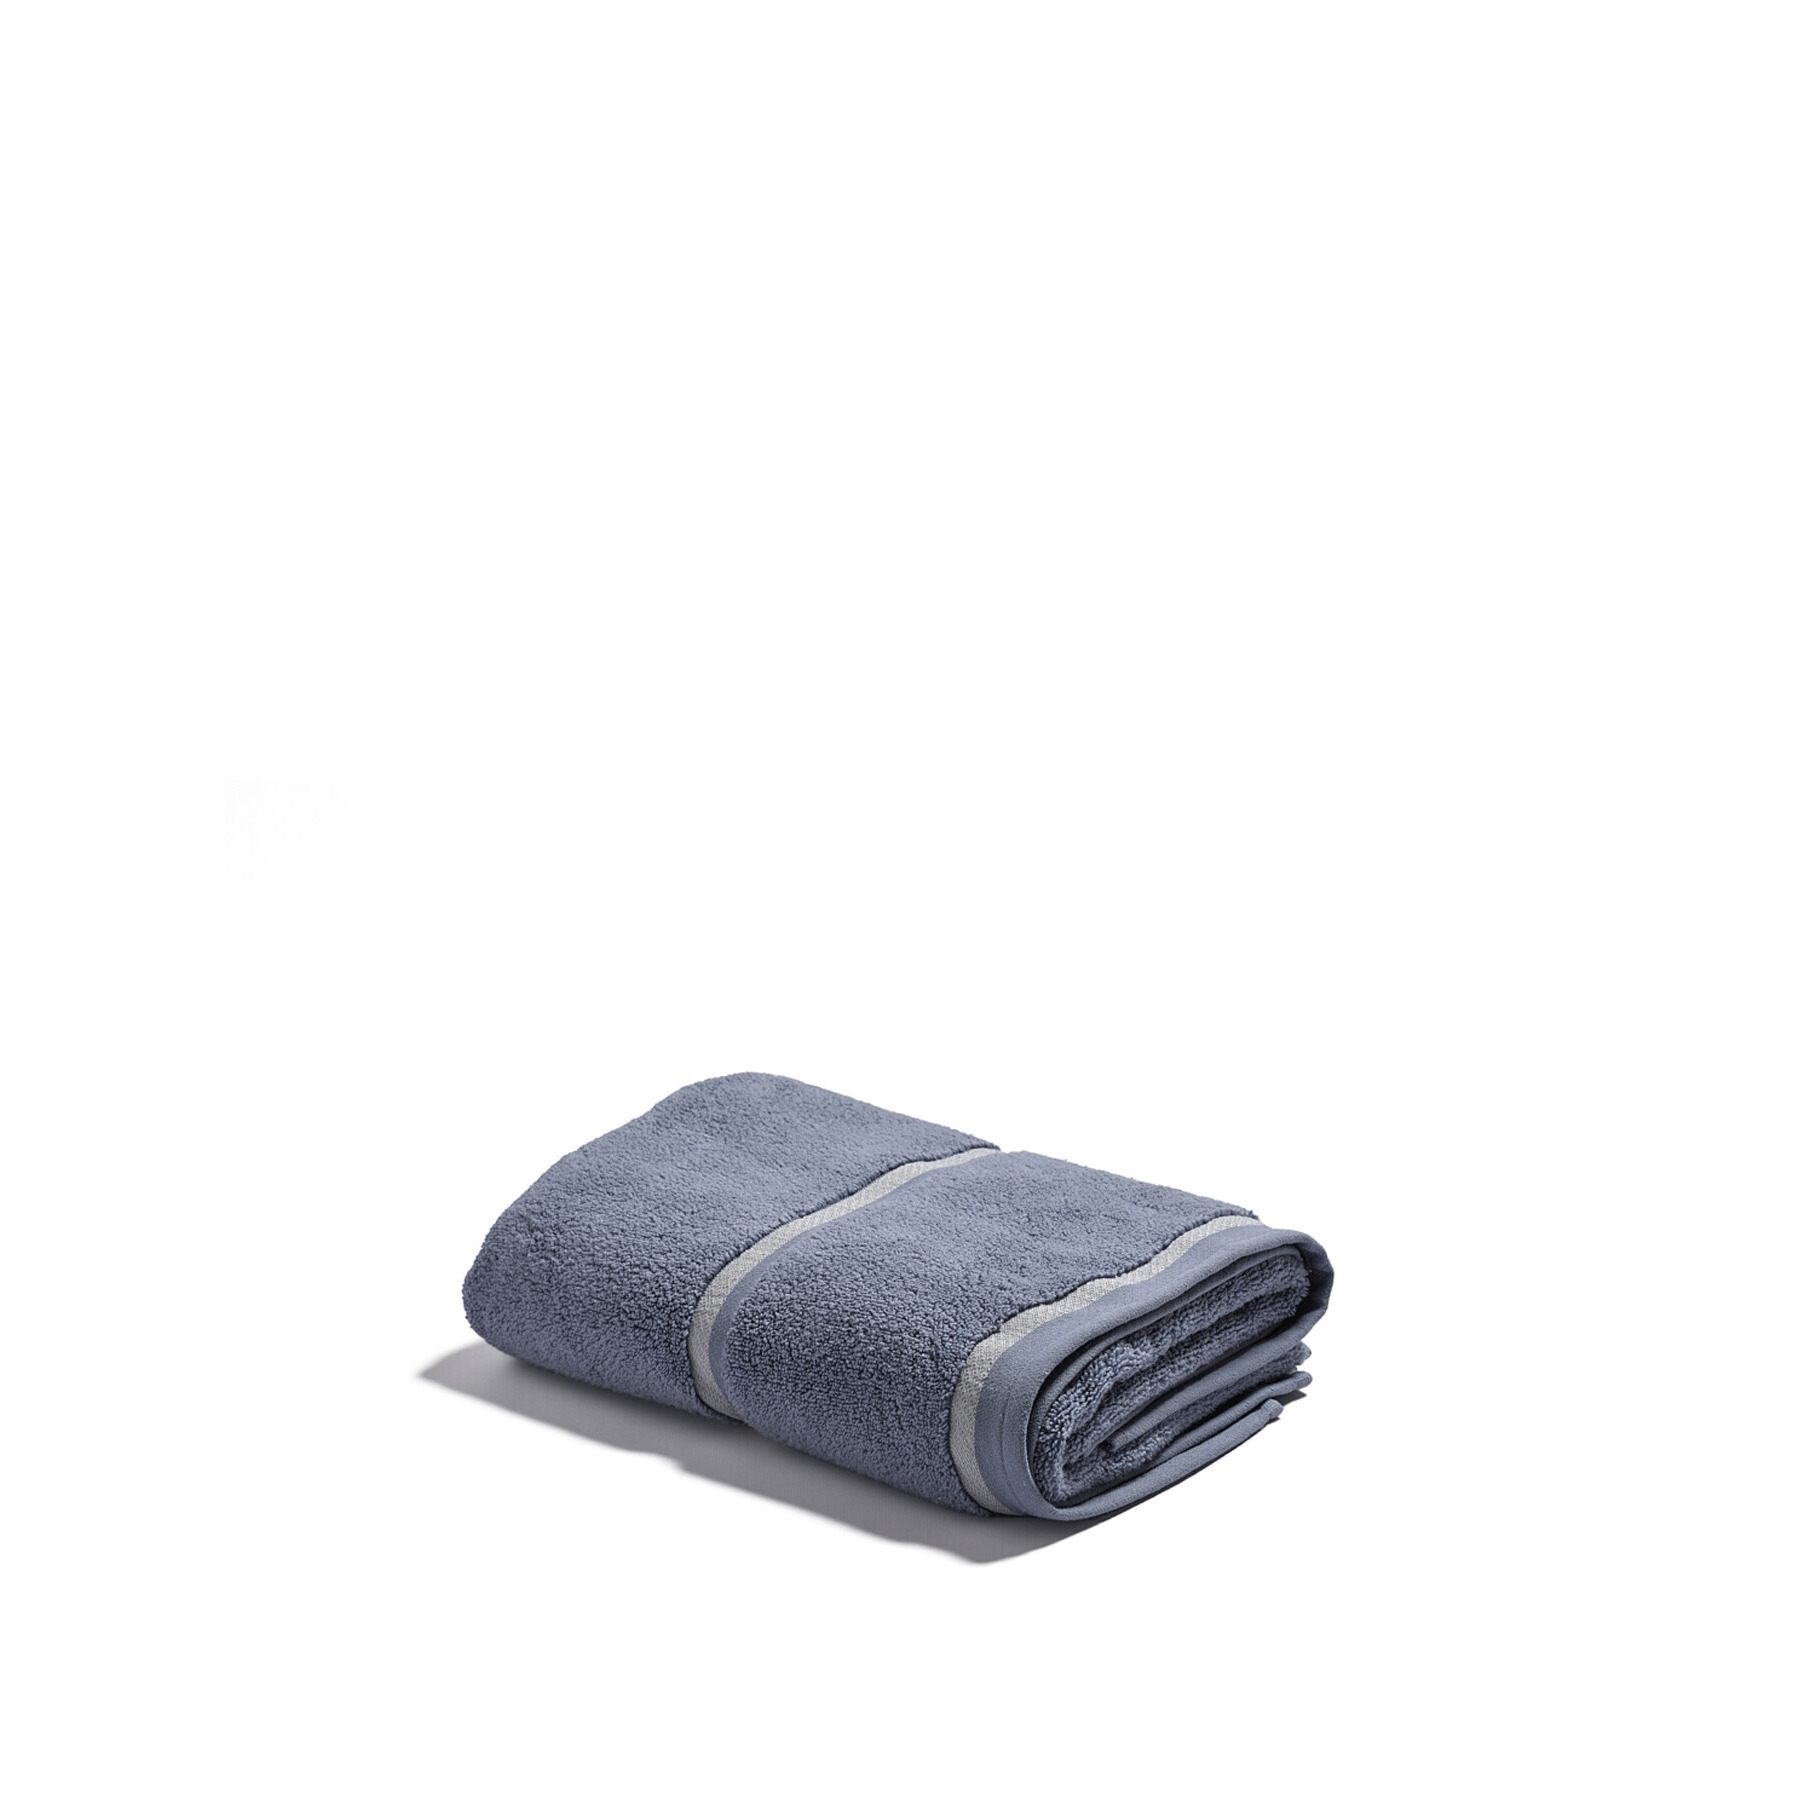 Piglet in Bed Plain Cotton Towel - Size Face Towel Blue - image 1